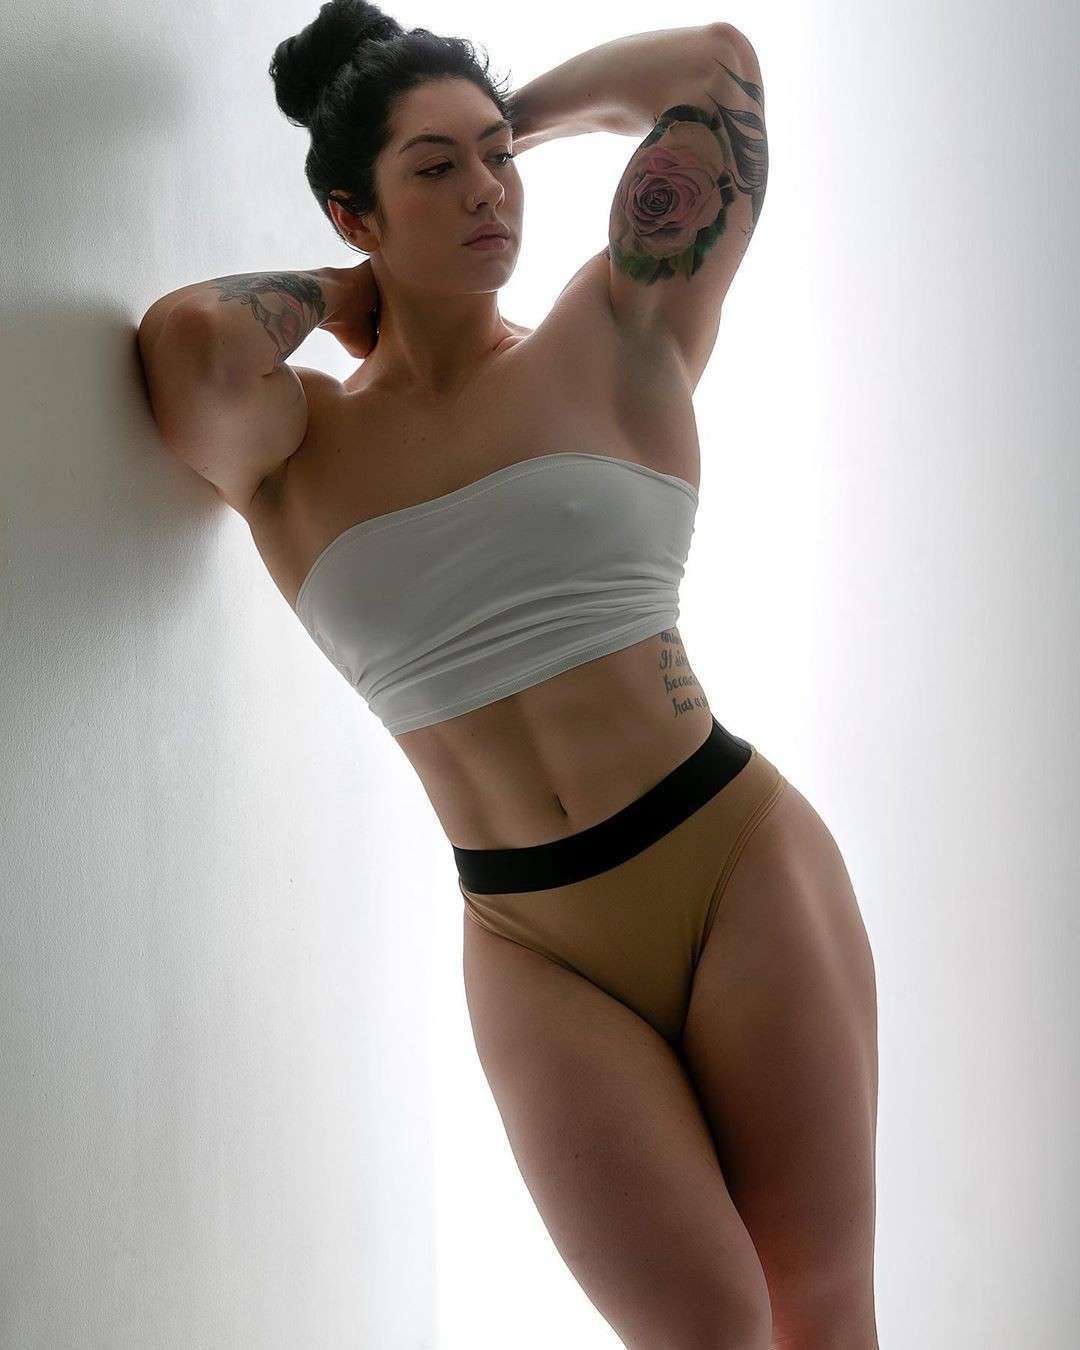 Natasha Bodybuilder Nude - Natasha Aughey nude - FitNudeGirls.com